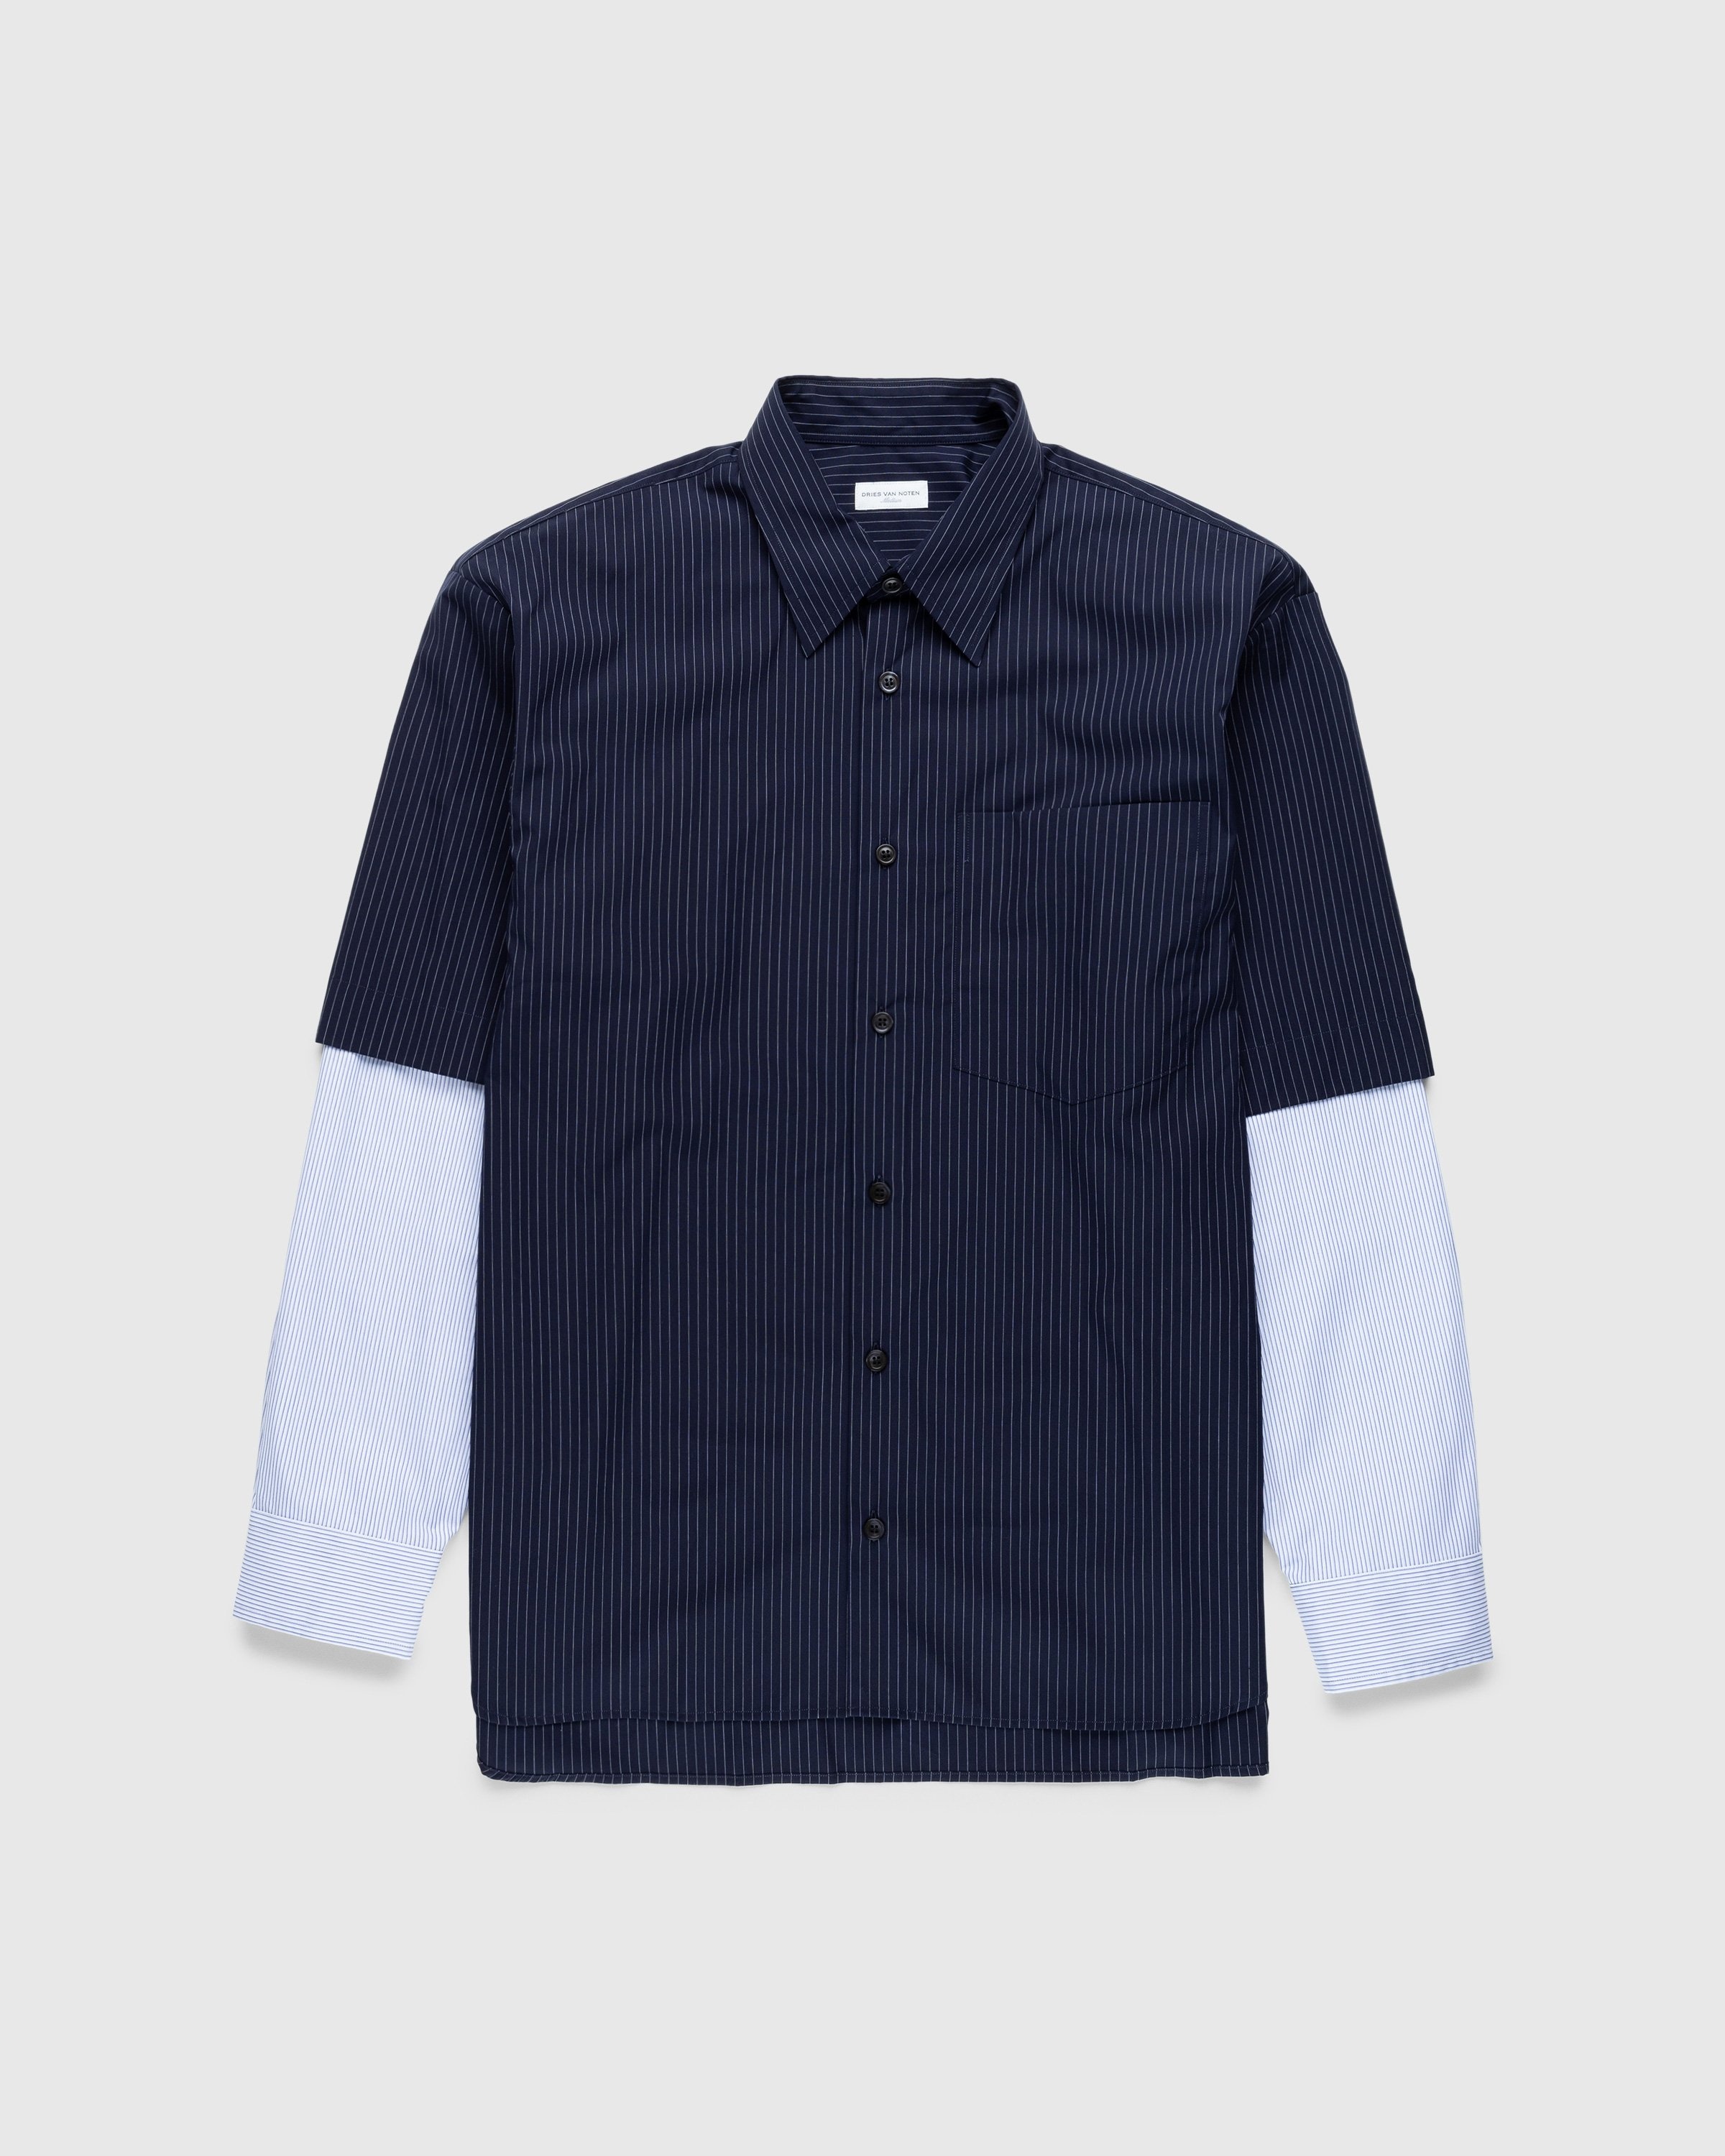 Dries van Noten – Carle Double Sleeve Shirt Navy | Highsnobiety Shop